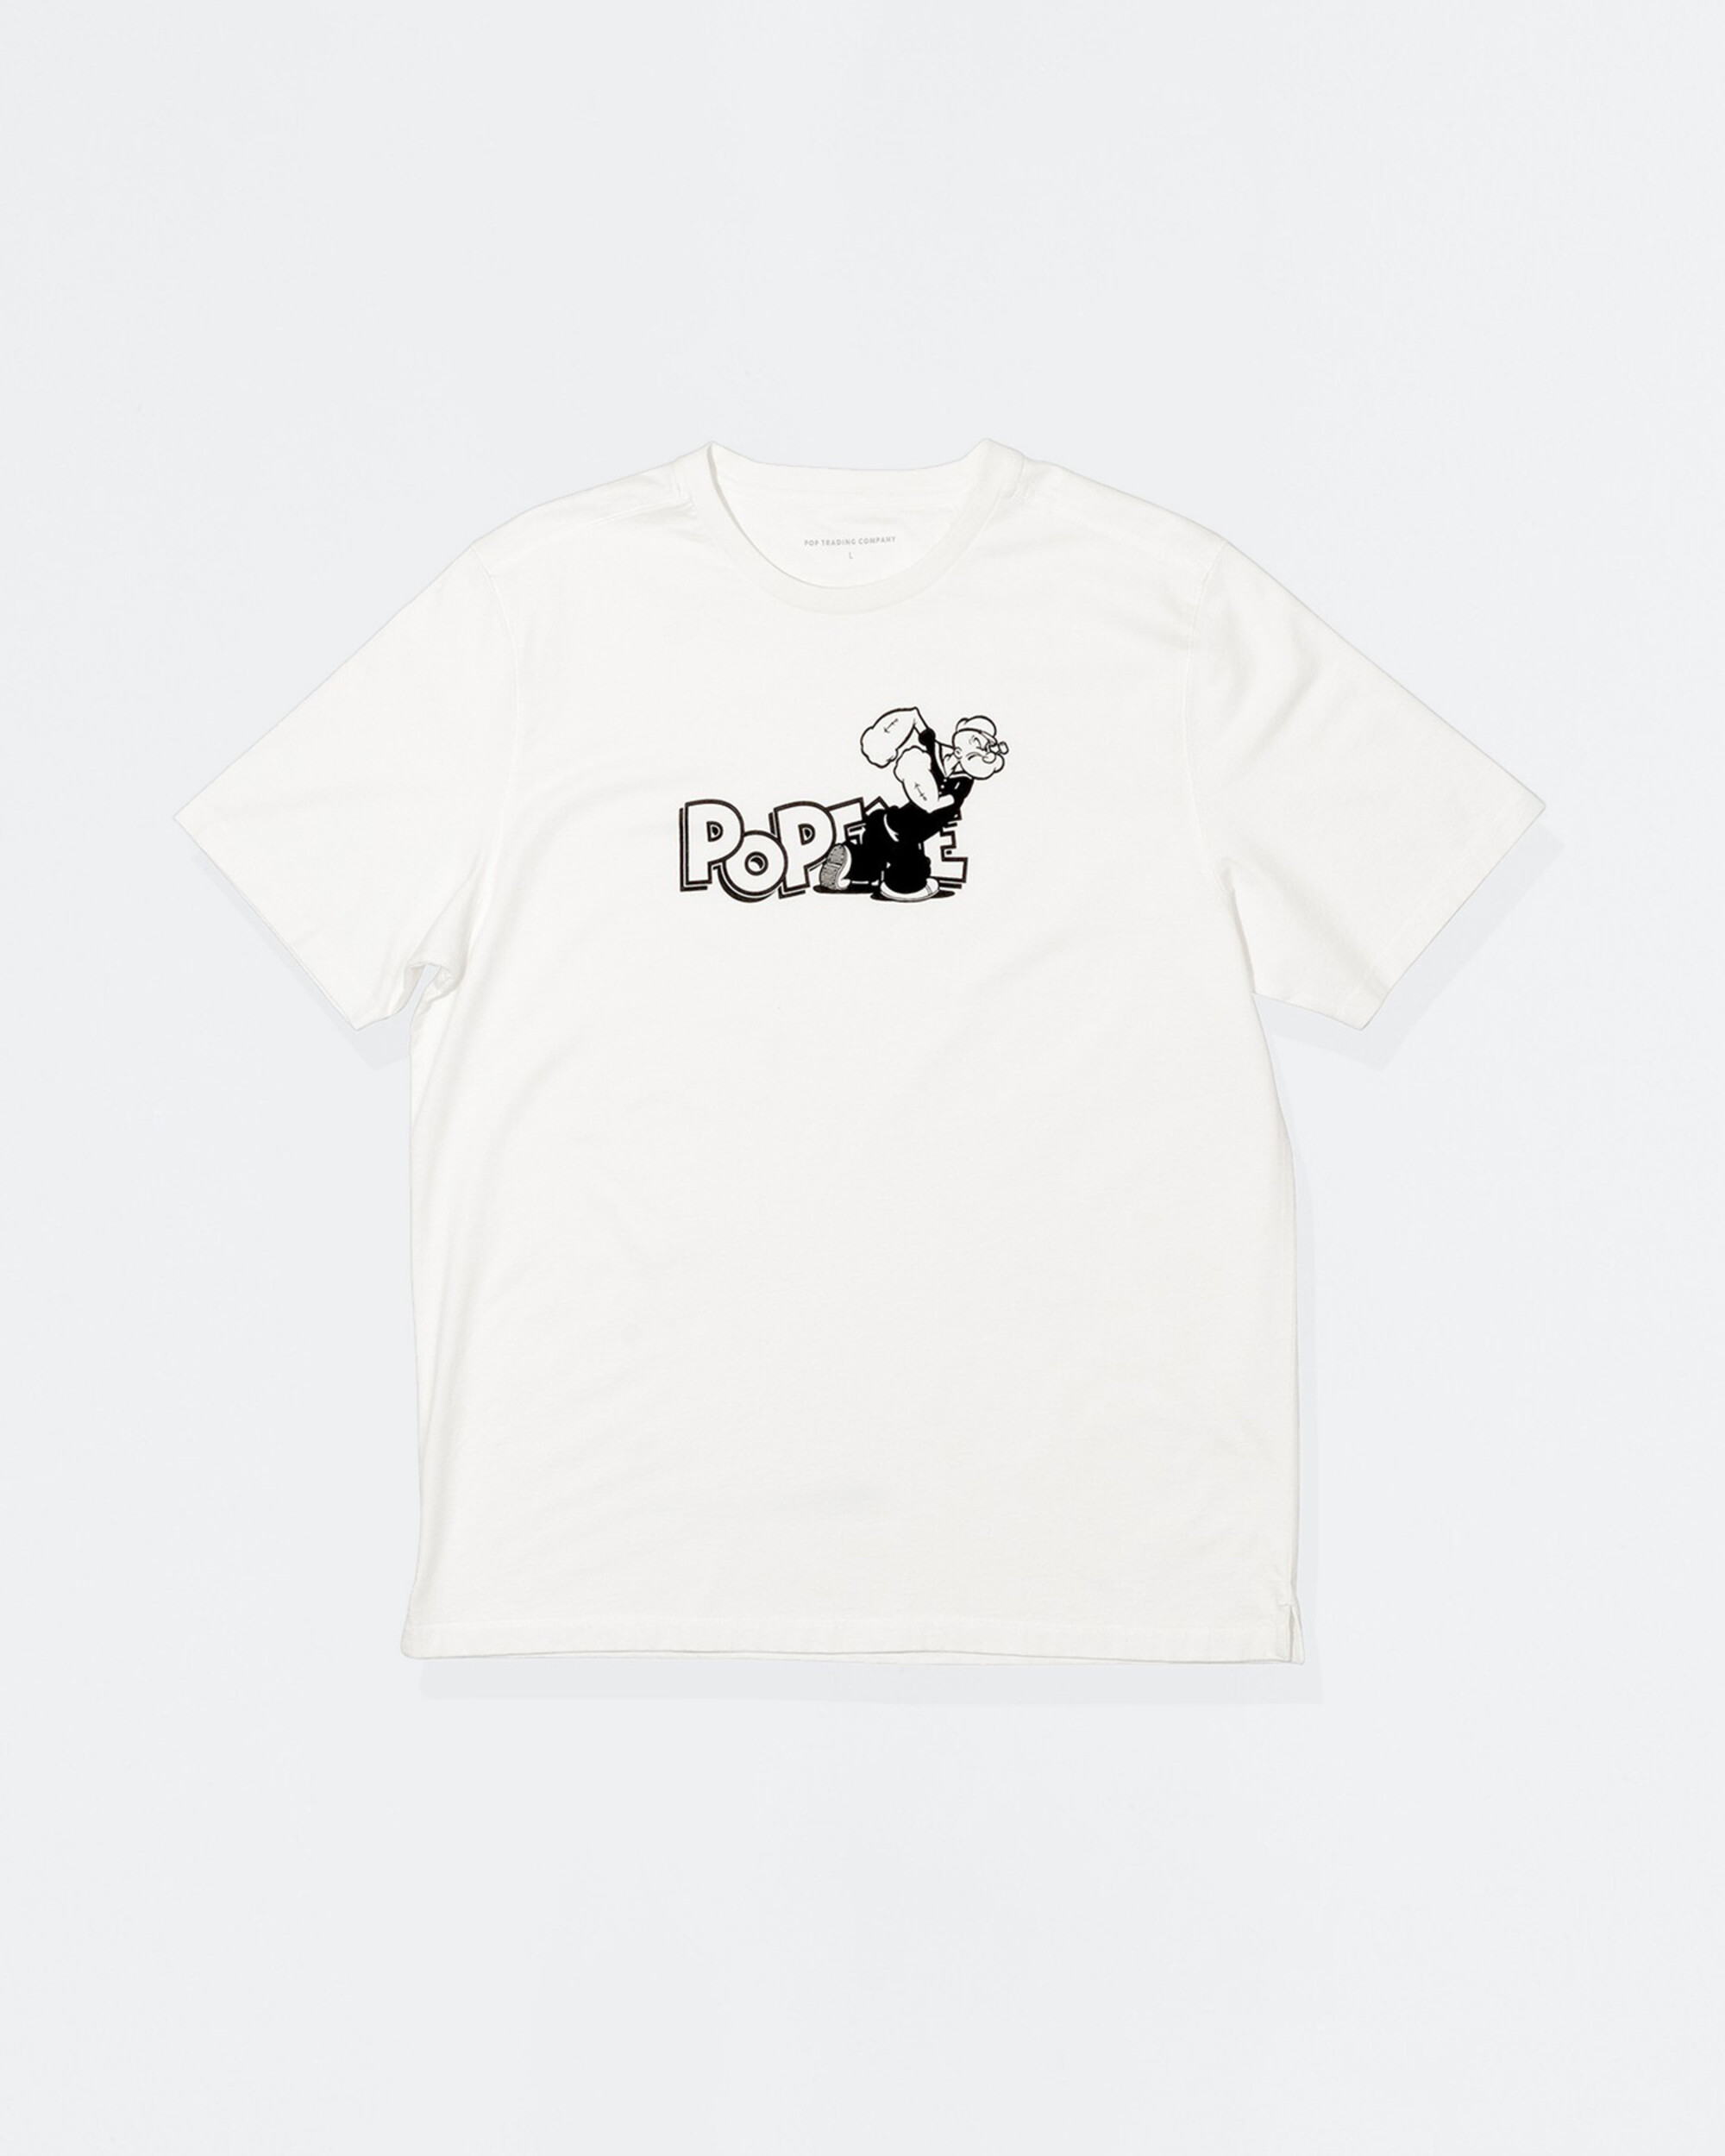 Pop Trading Co X Popeye T-shirt white